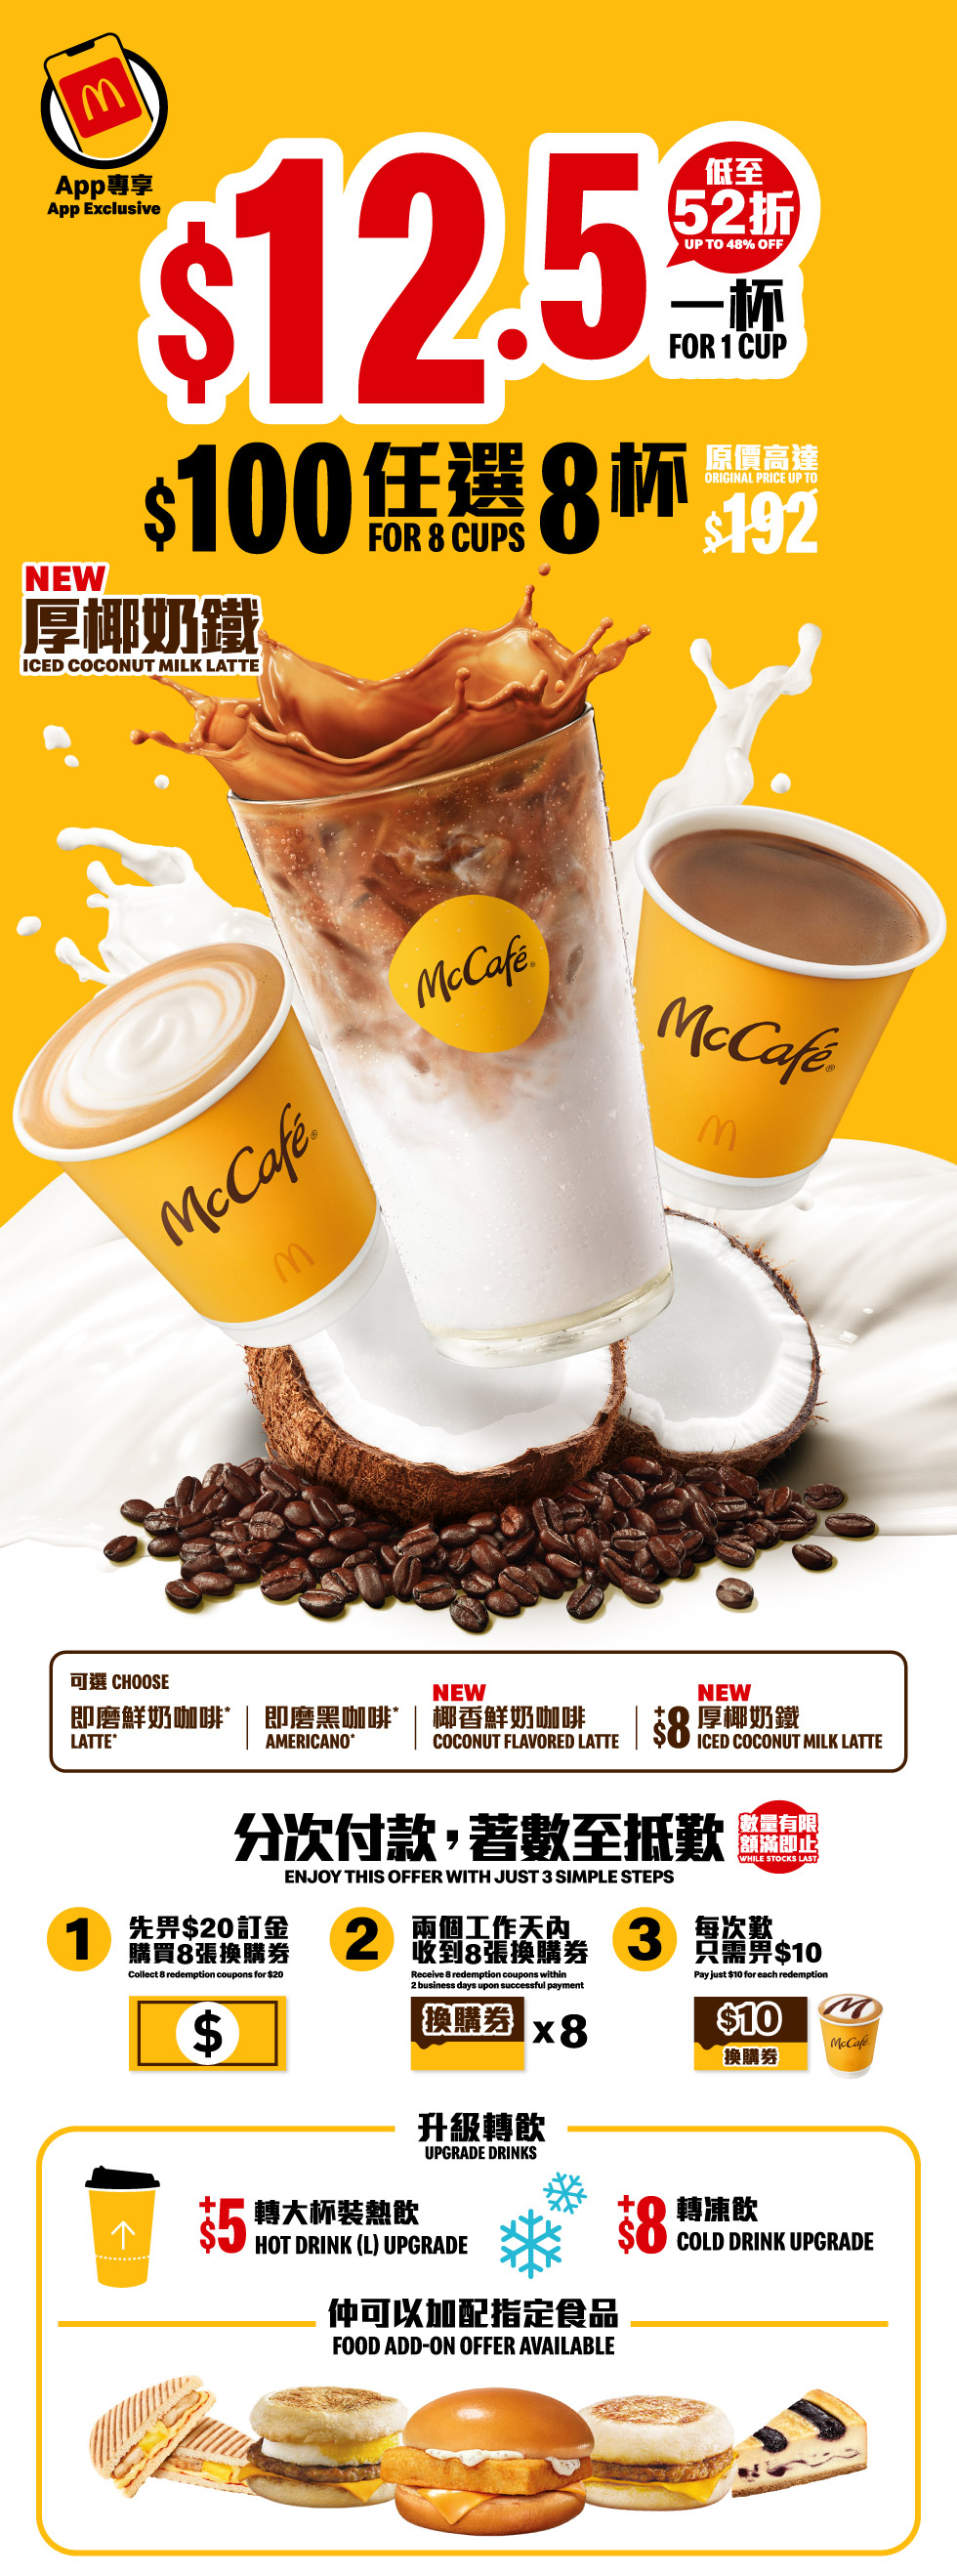 McCafé ®手調咖啡換購券